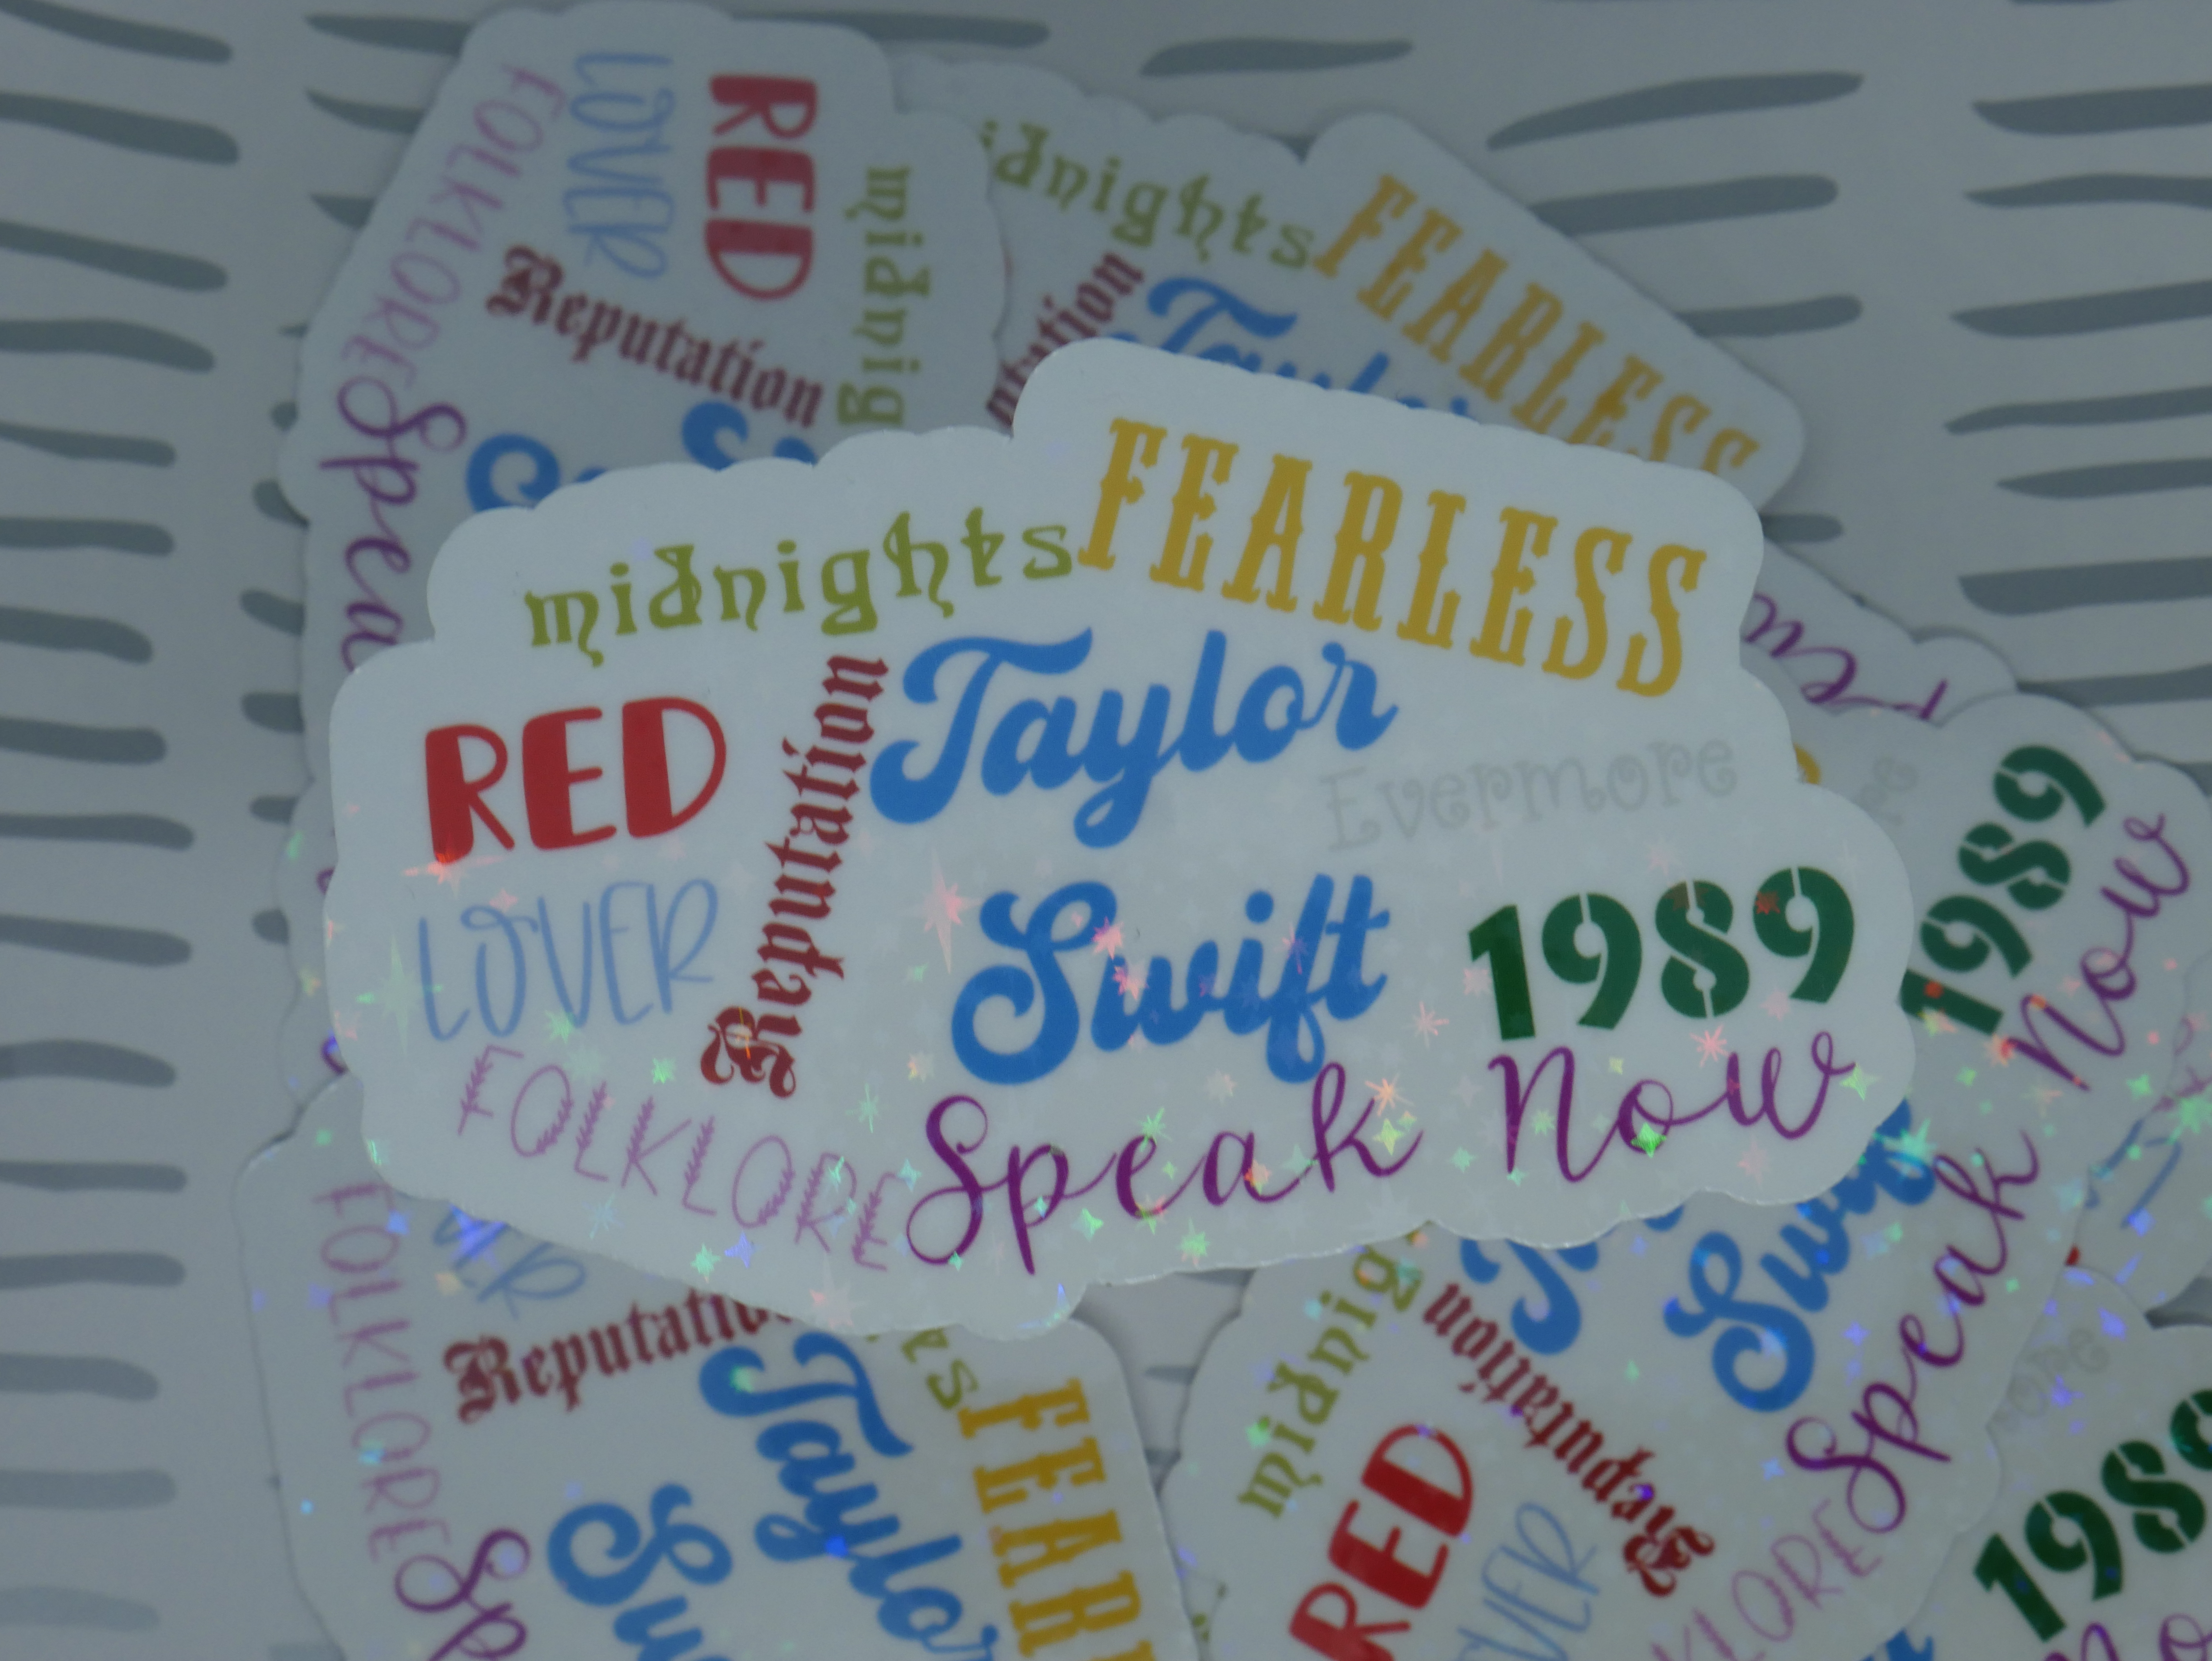 Taylor Swift album titles holographic waterproof vinyl sticker